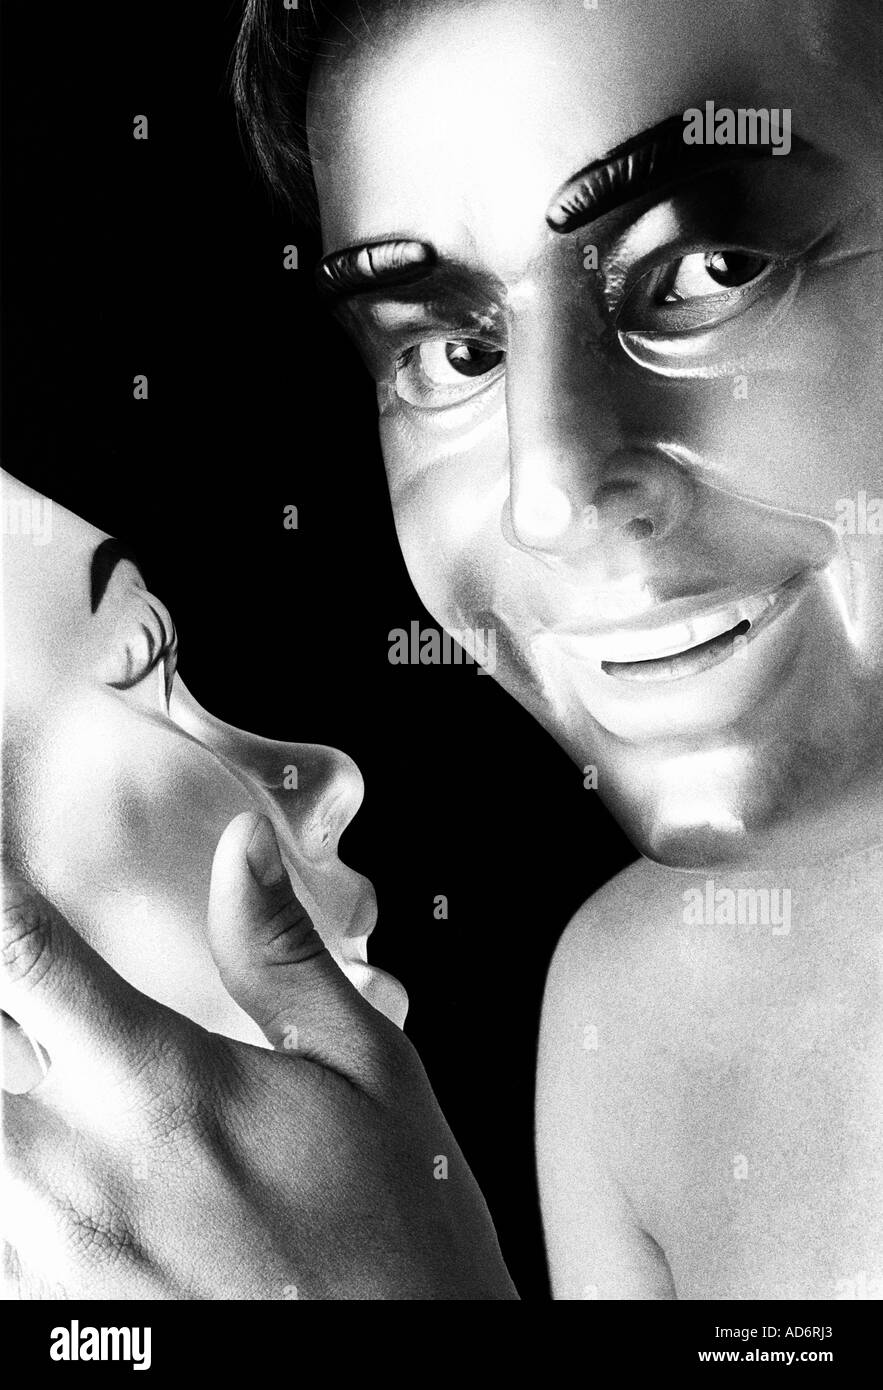 plasticitet Synes ungdomskriminalitet Man wearing mask holding a female mask looking at camera Stock Photo - Alamy